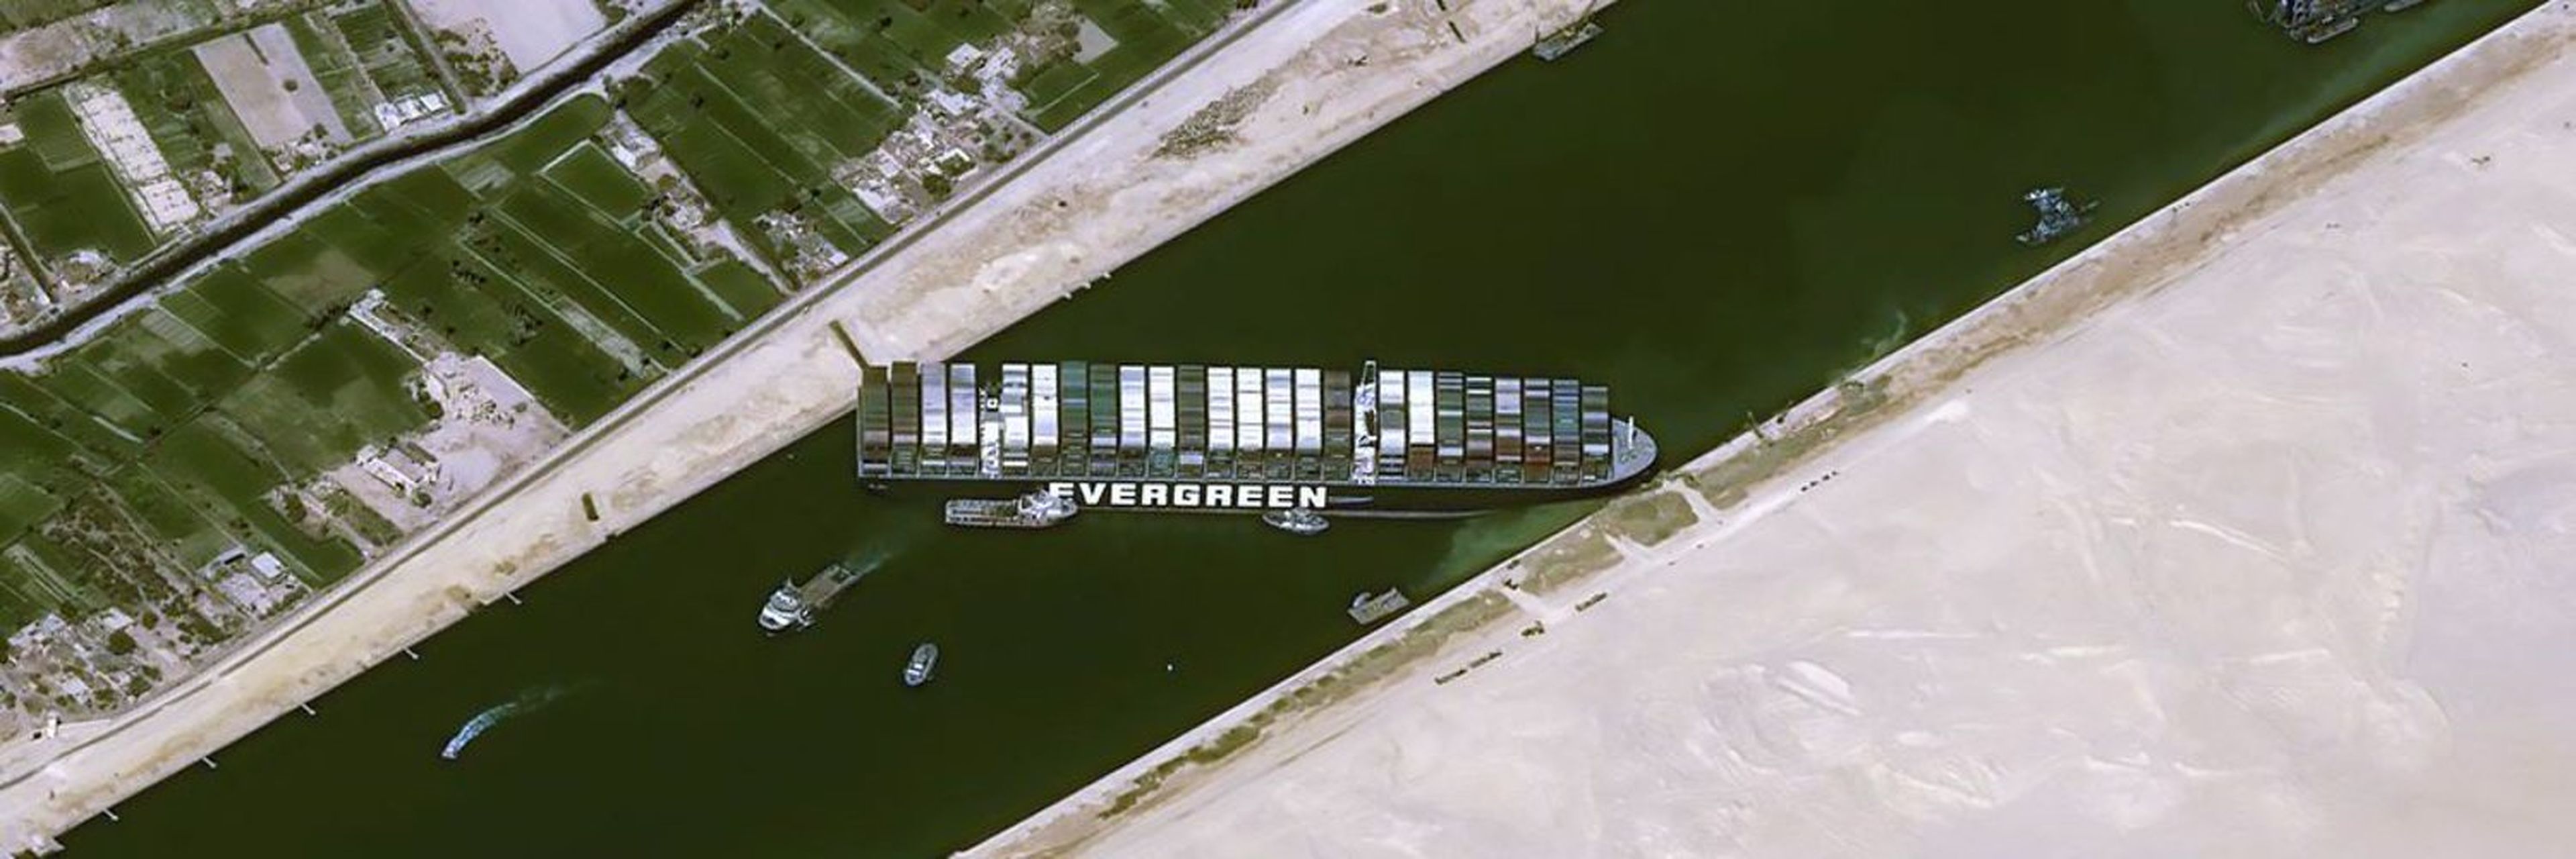 PS5 stock Canal de Suez Evergreen